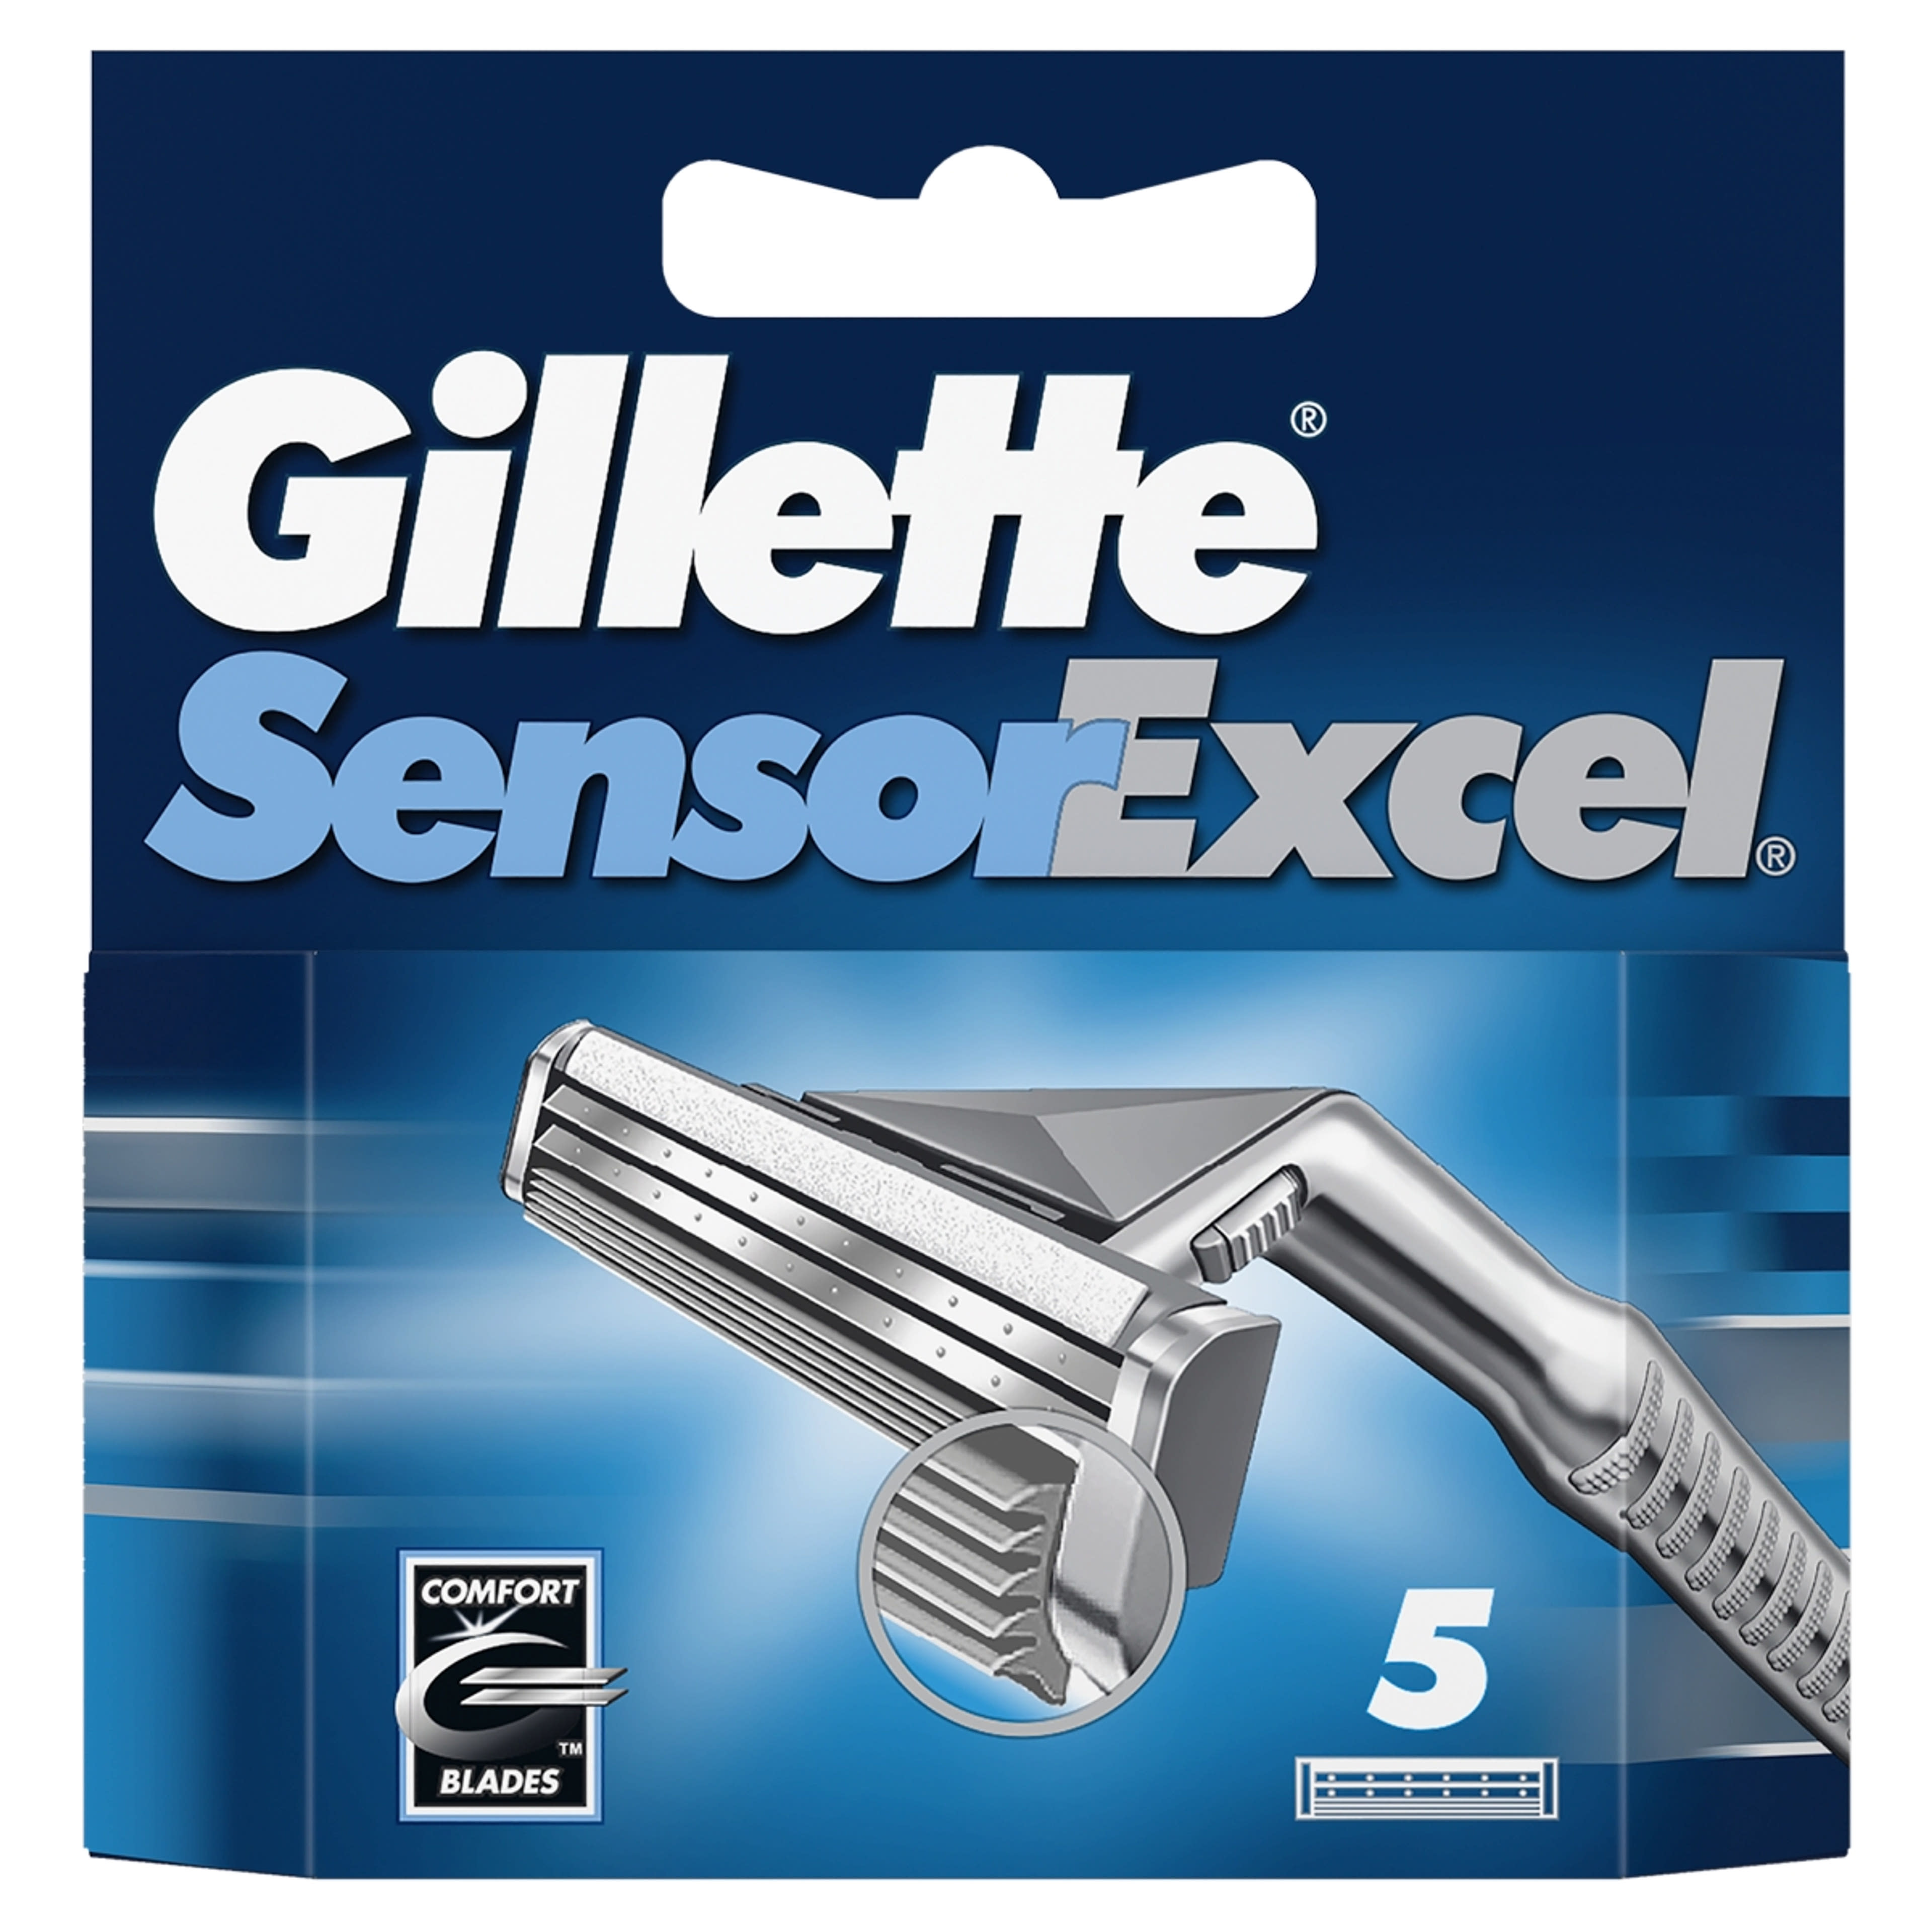 Gillette Sensor Excel borotva betét - 5 db-1